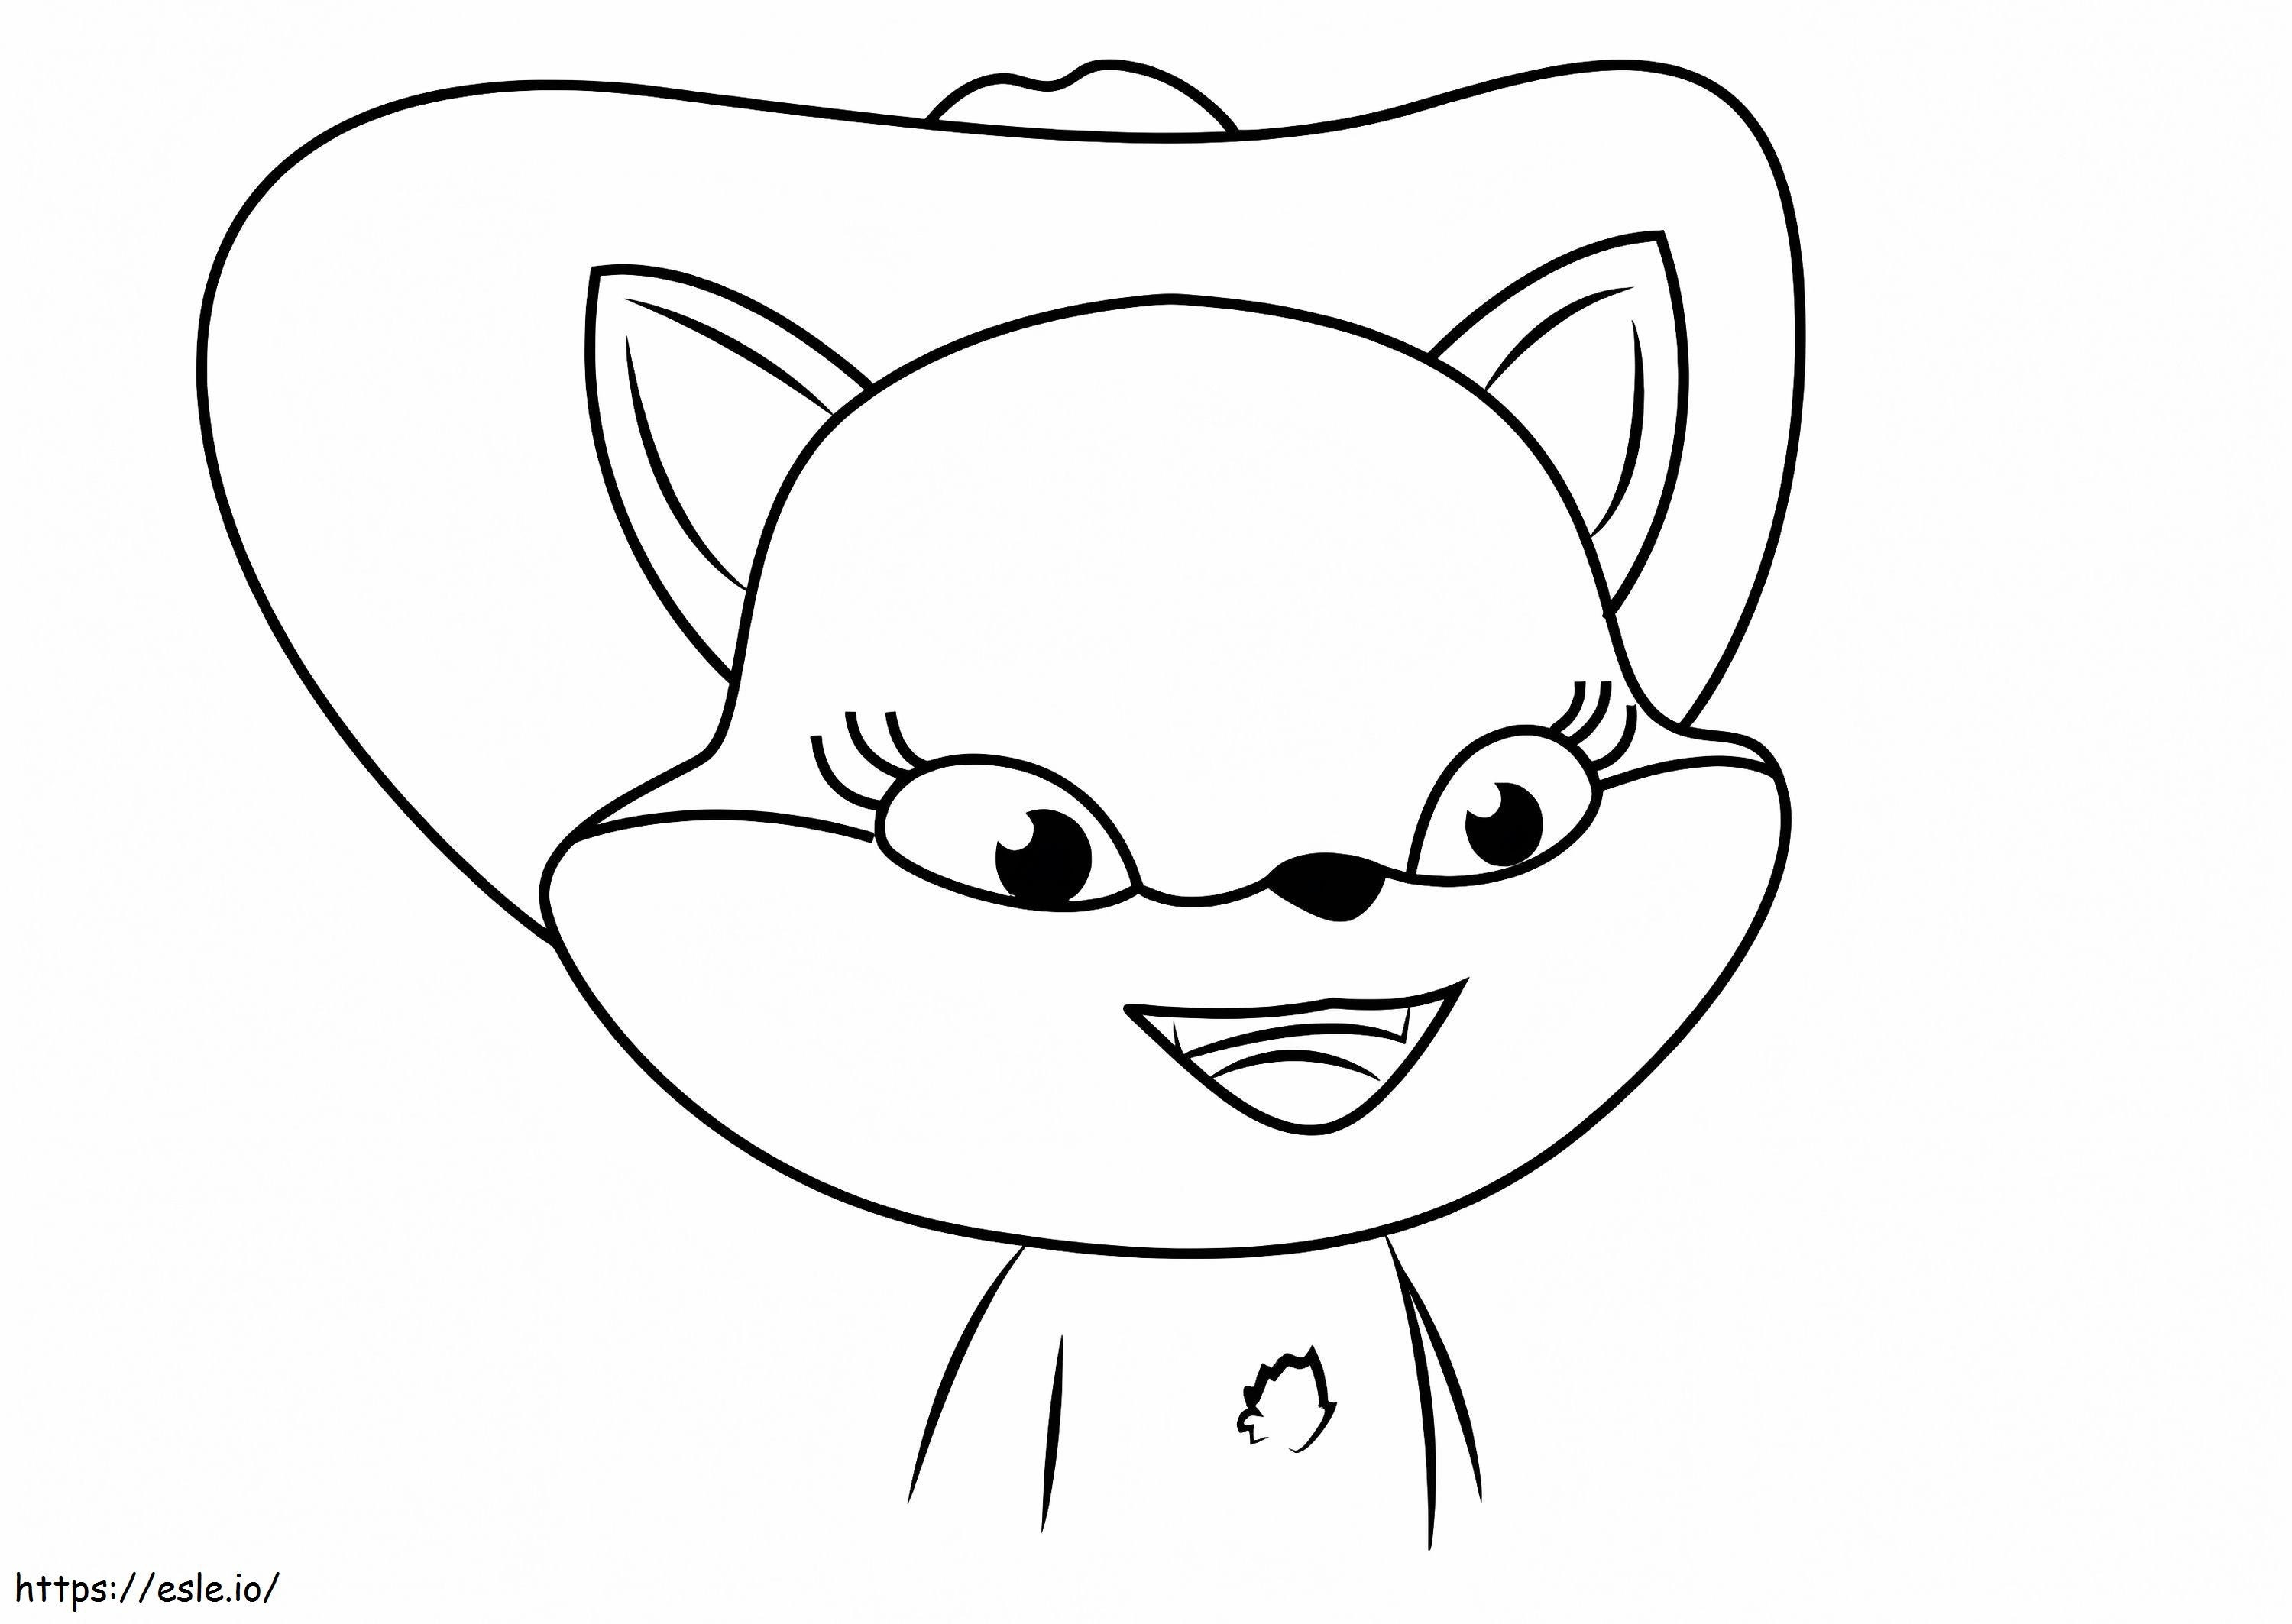 Frida Fox coloring page